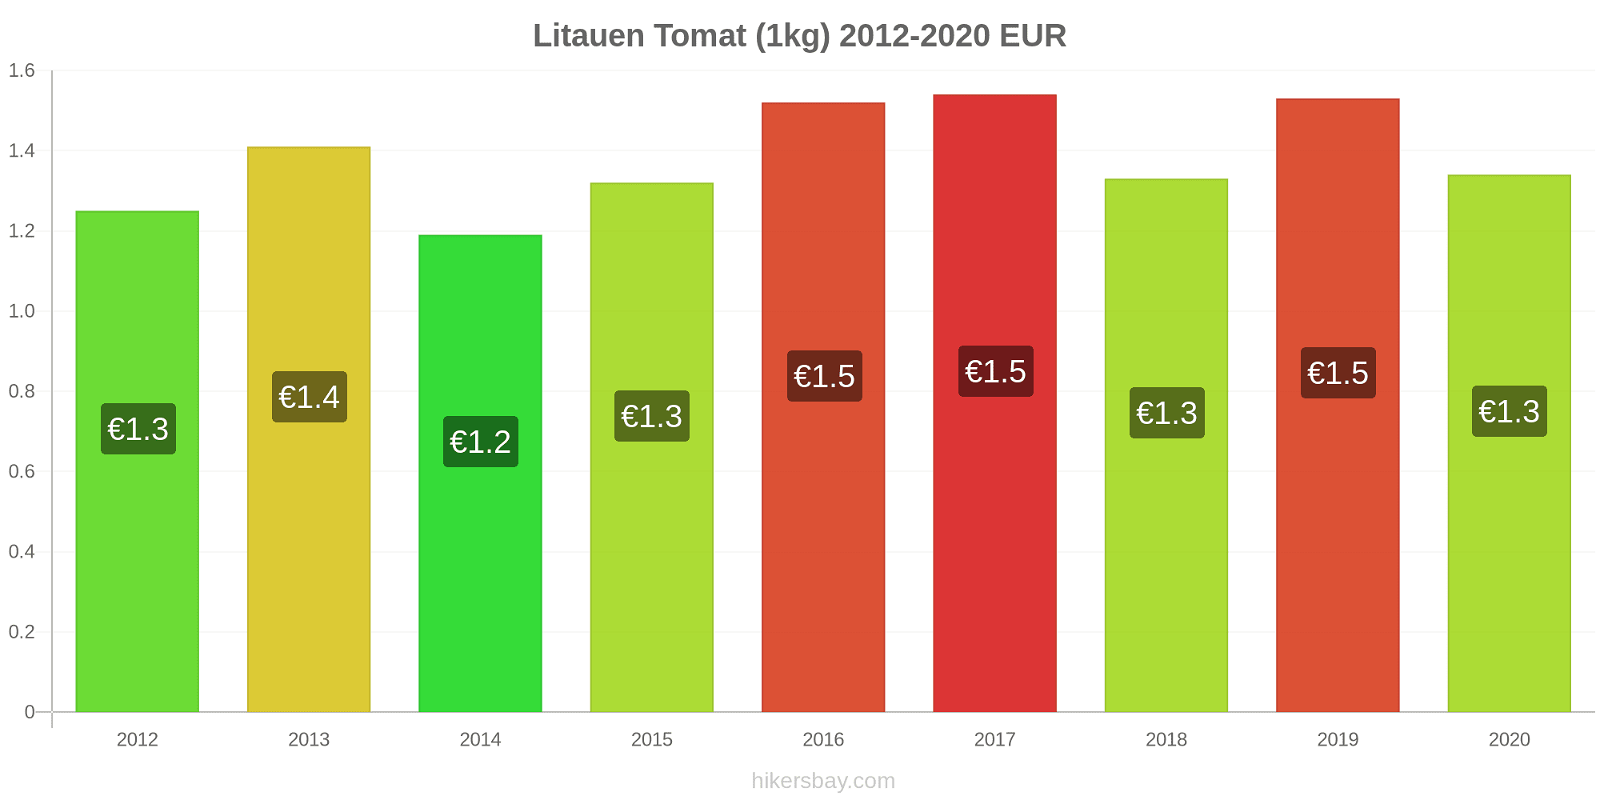 Litauen prisendringer Tomat (1kg) hikersbay.com